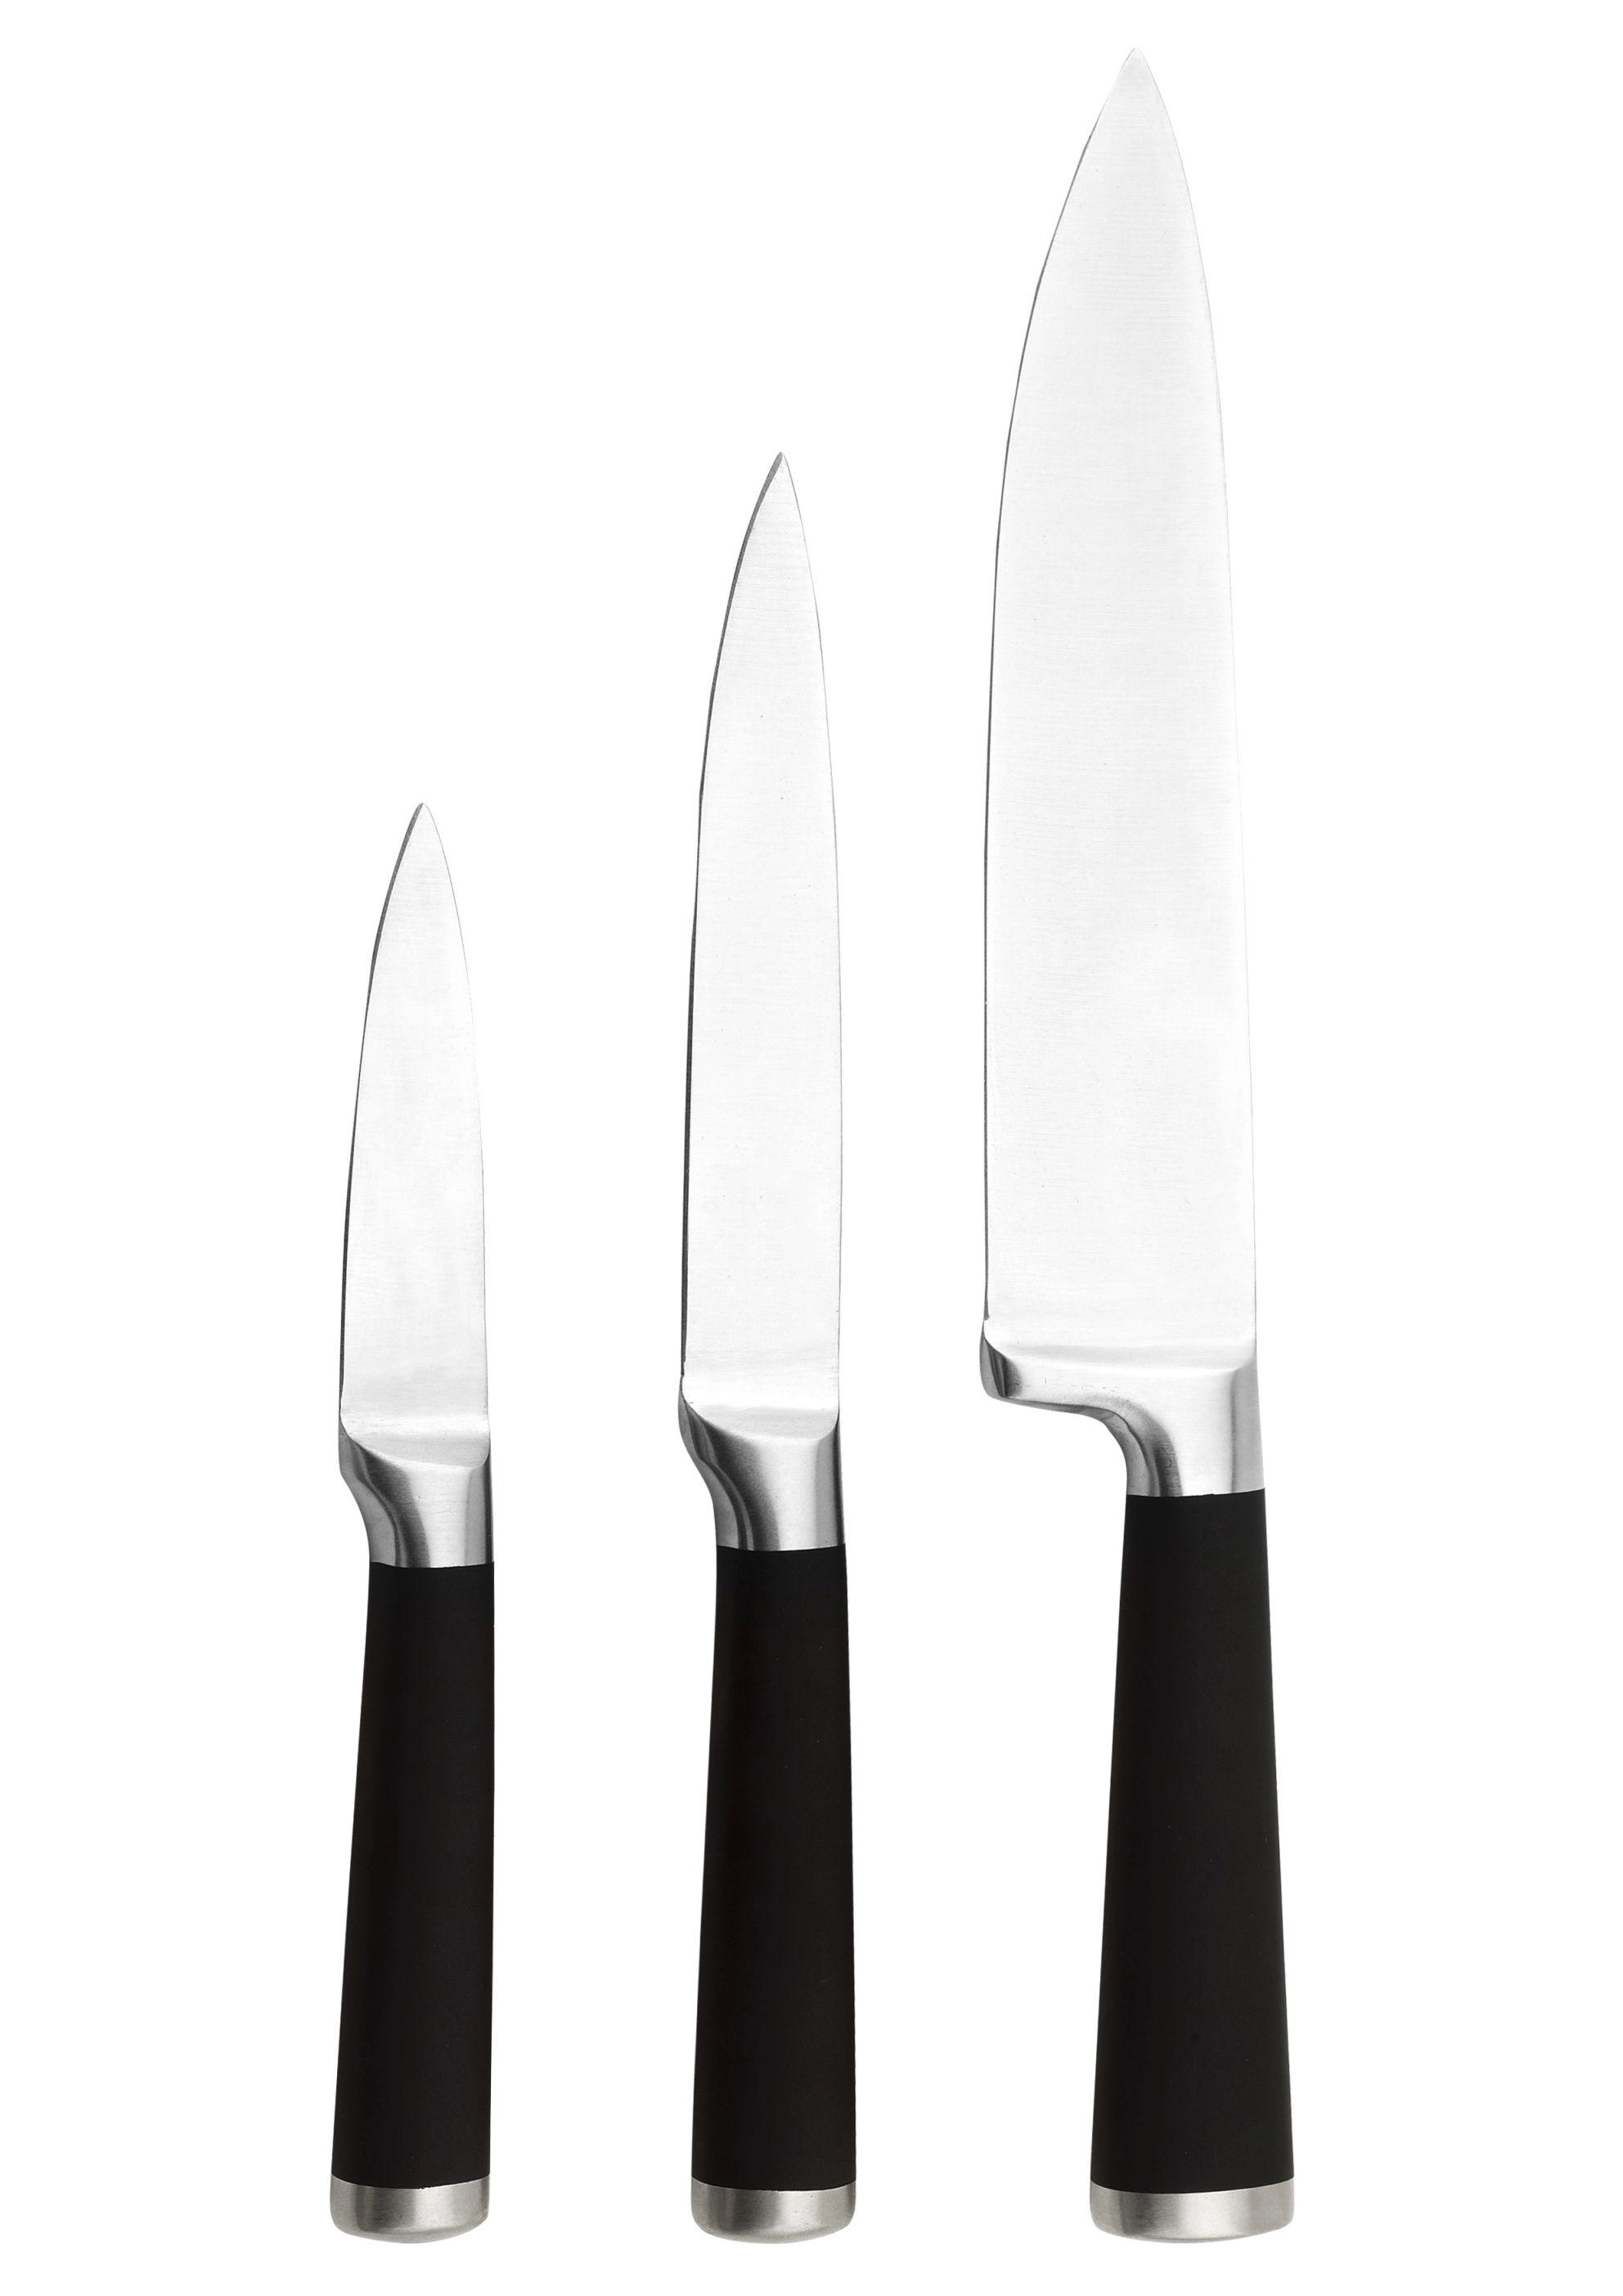 Set de cuțite Travor - culoare inox/negru, Modern, metal - Premium Living